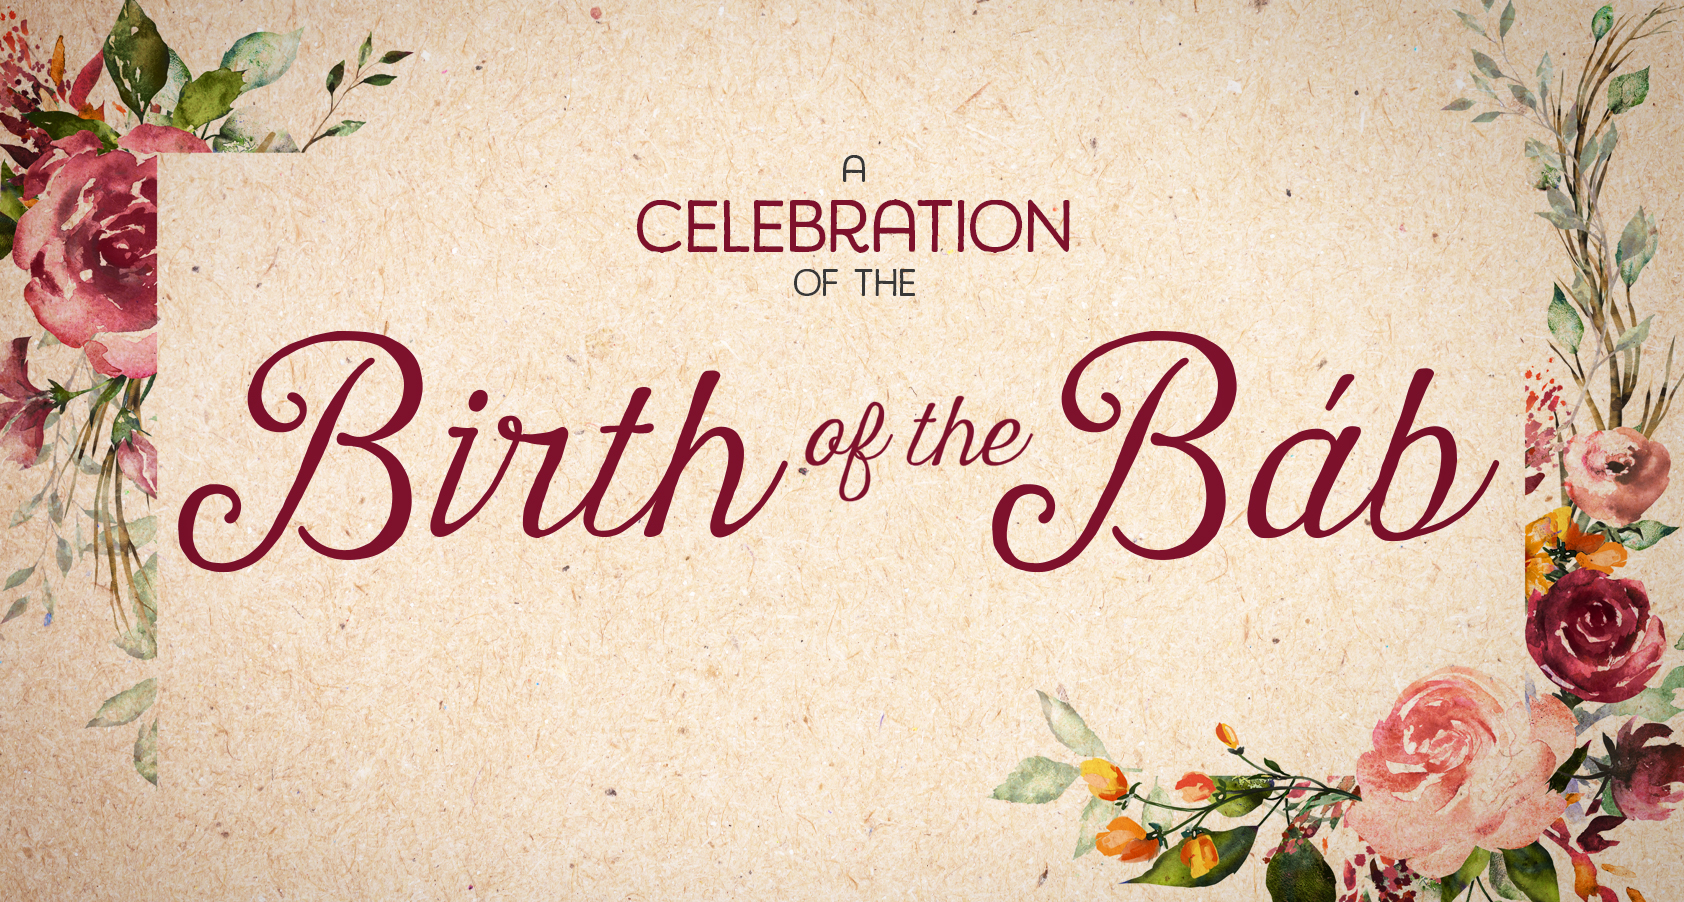 A Celebration of the Birth of the Báb Bahá’í Center of Washtenaw County